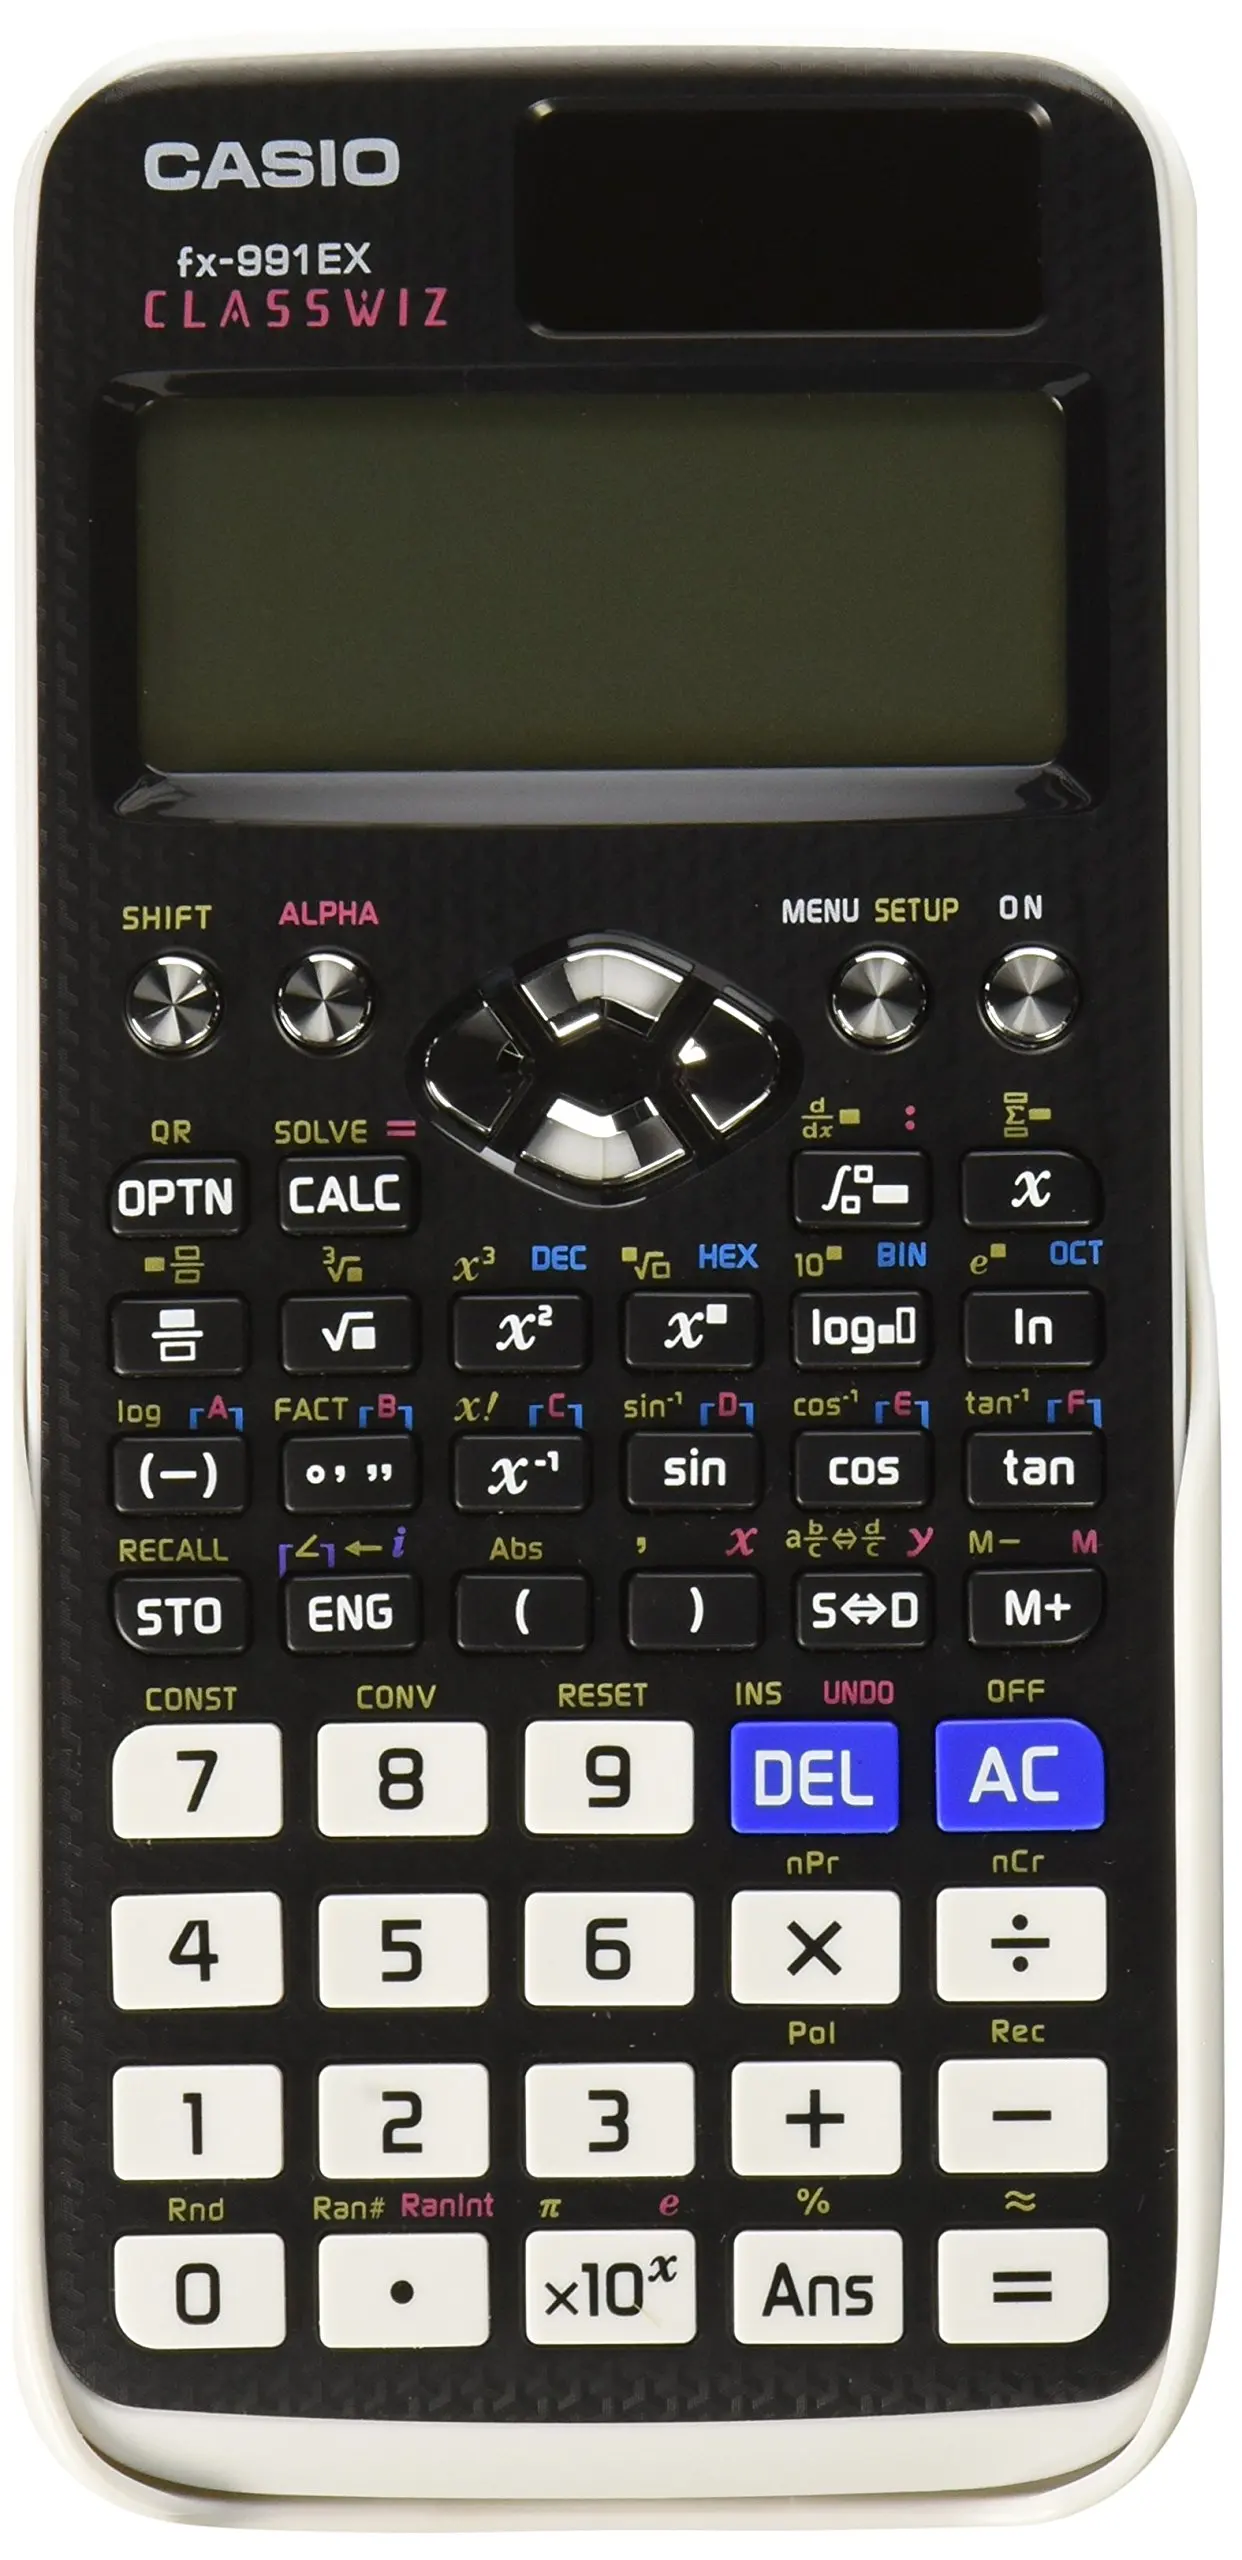 Casio Fx-991ex Scientific Calculator FX 991 EX 552 Function for sale online